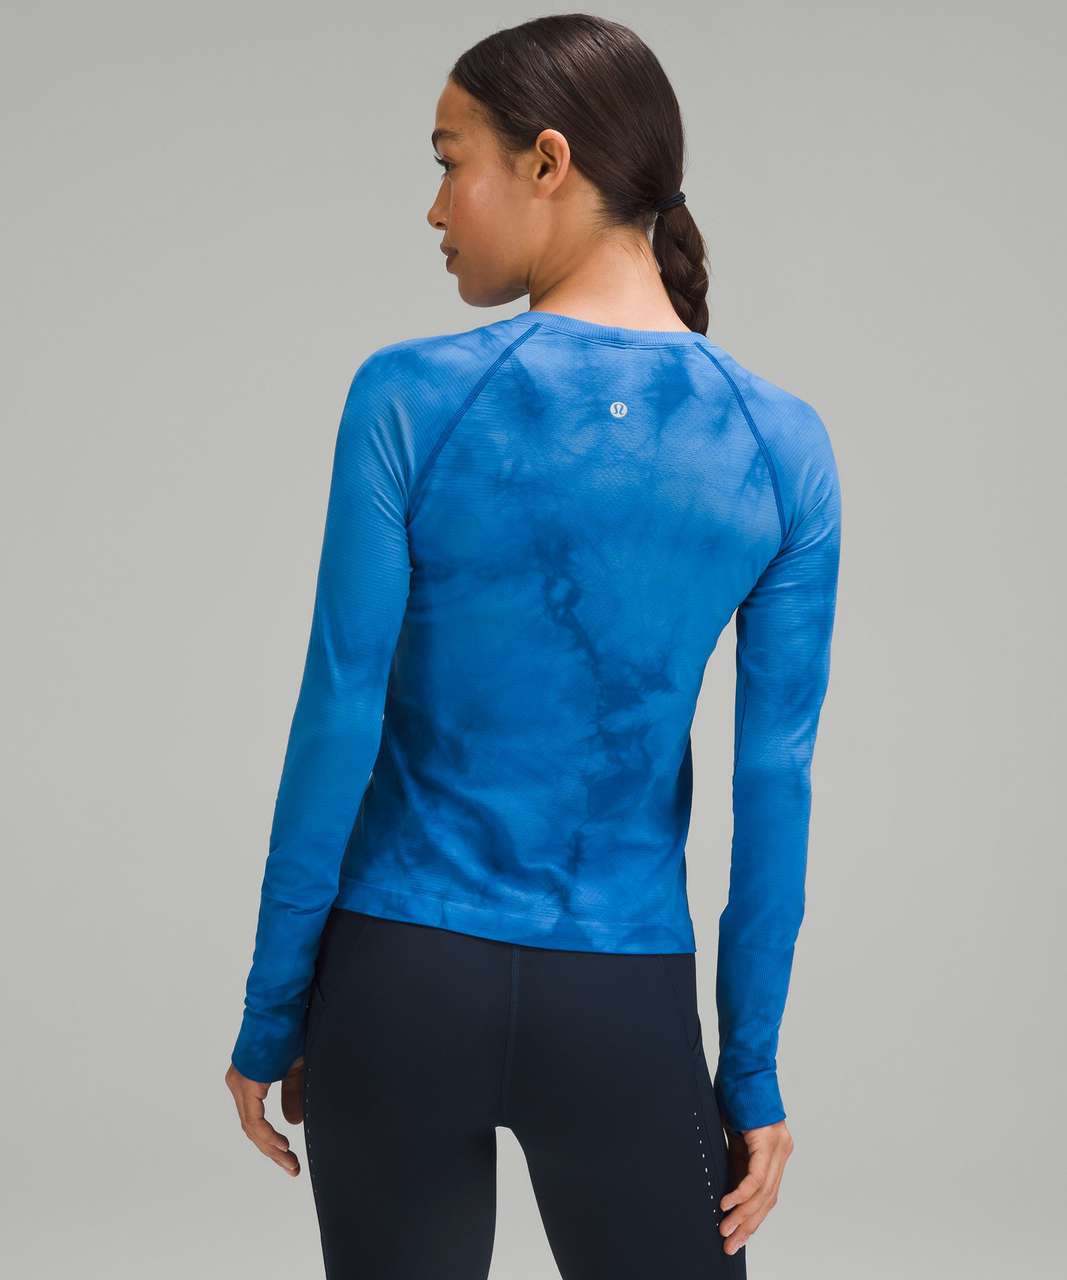 Lululemon Swiftly Tech Long-Sleeve Shirt 2.0 Race Length *Marble Dye - Marble Dye Pipe Dream Blue / Symphony Blue